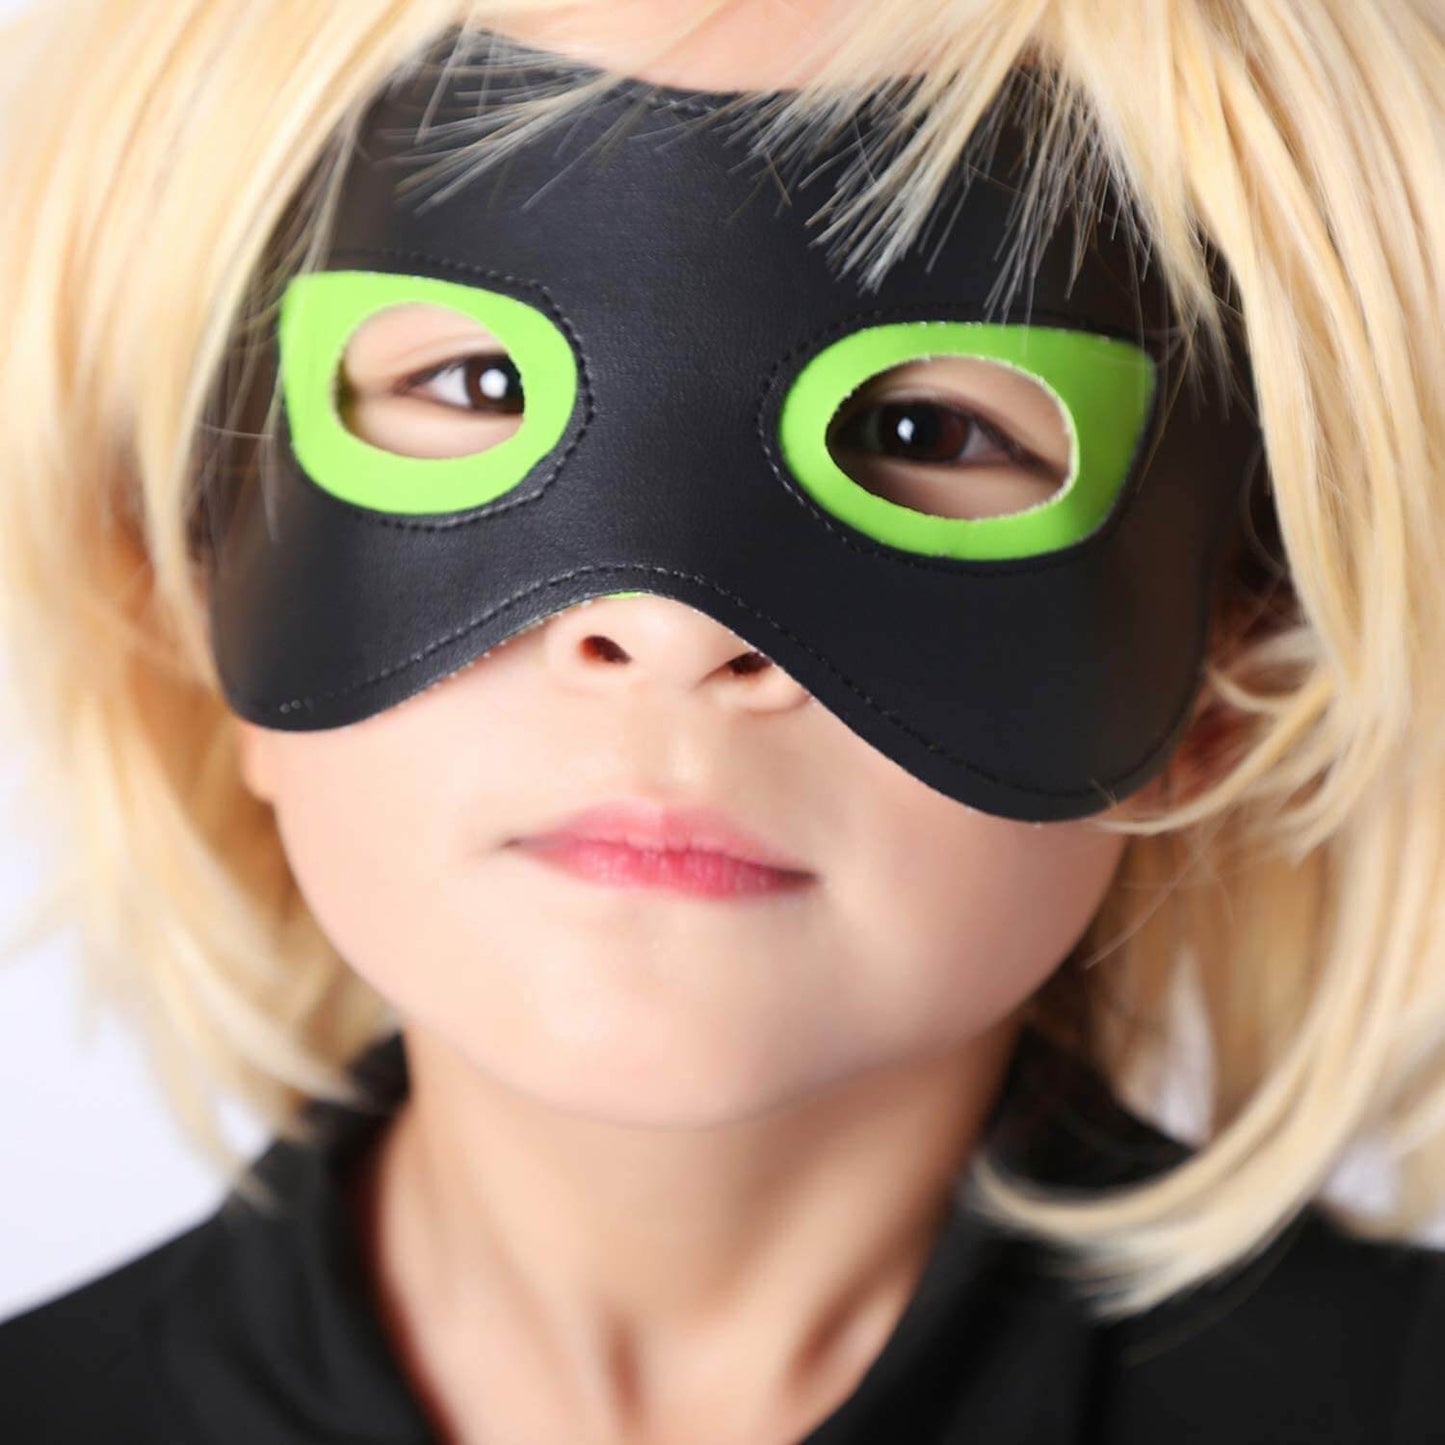 Kids Cat Noir Costume Halloween Cosplay Jumpsuit Headband Eye Mask Full Set for Boys and Grils